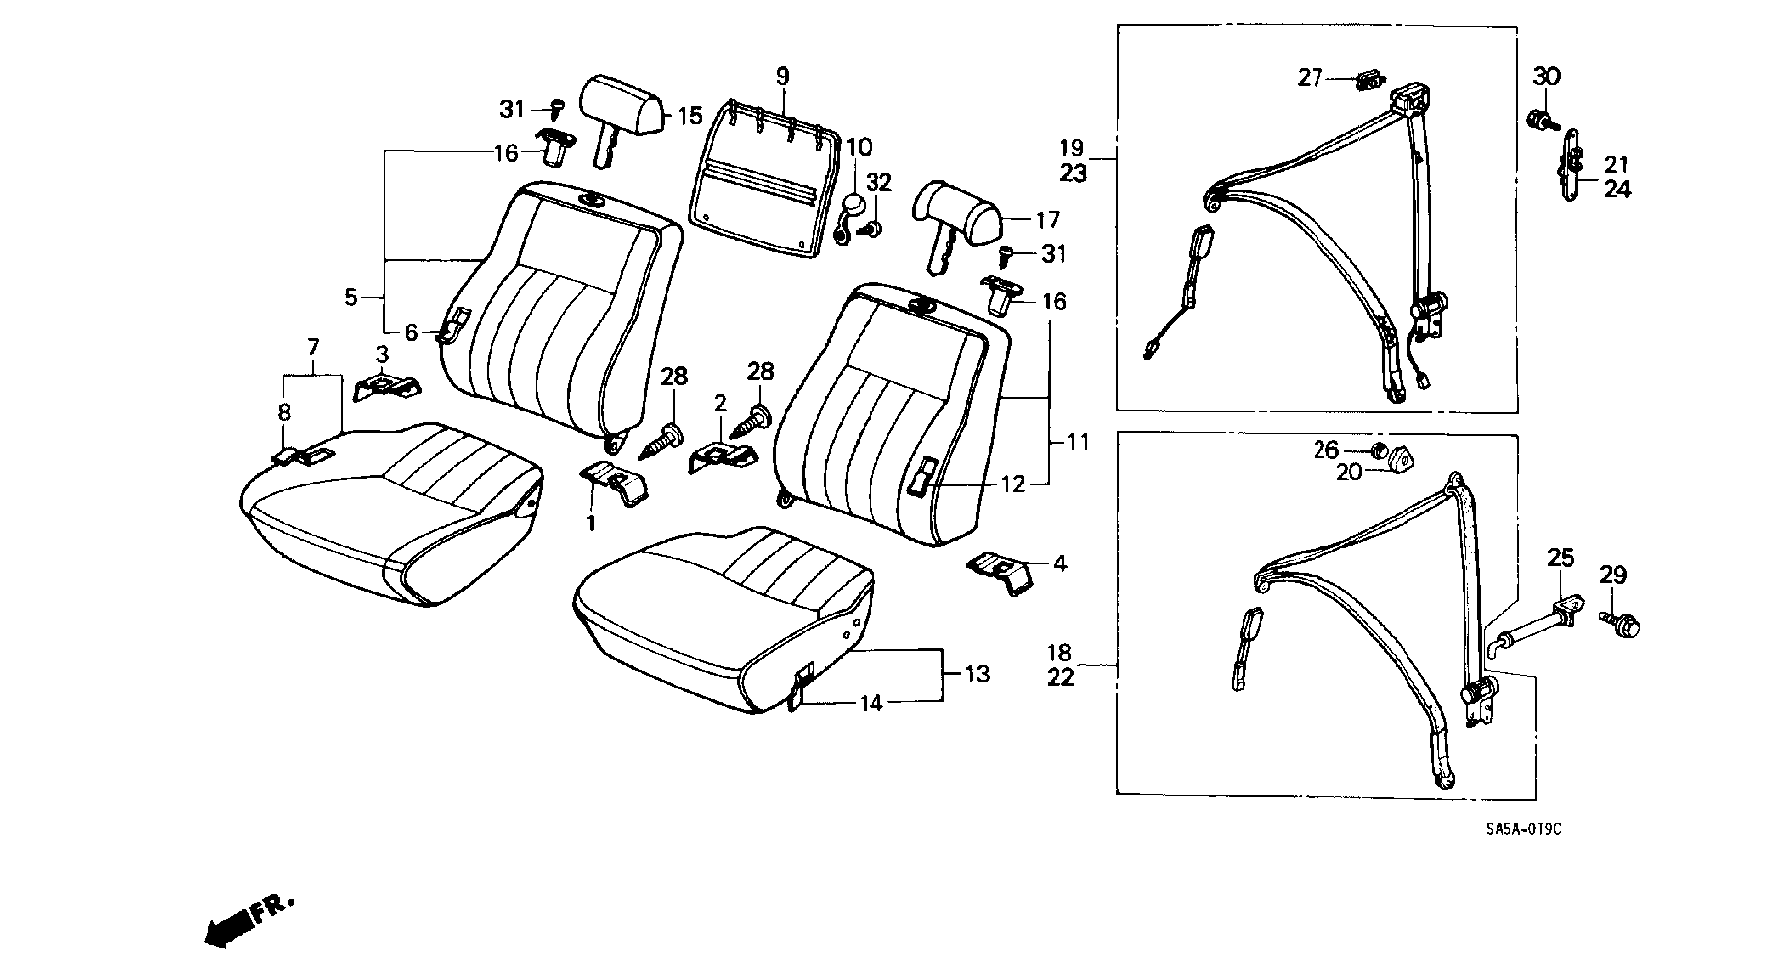 FRONT SEAT/ SEAT BELT